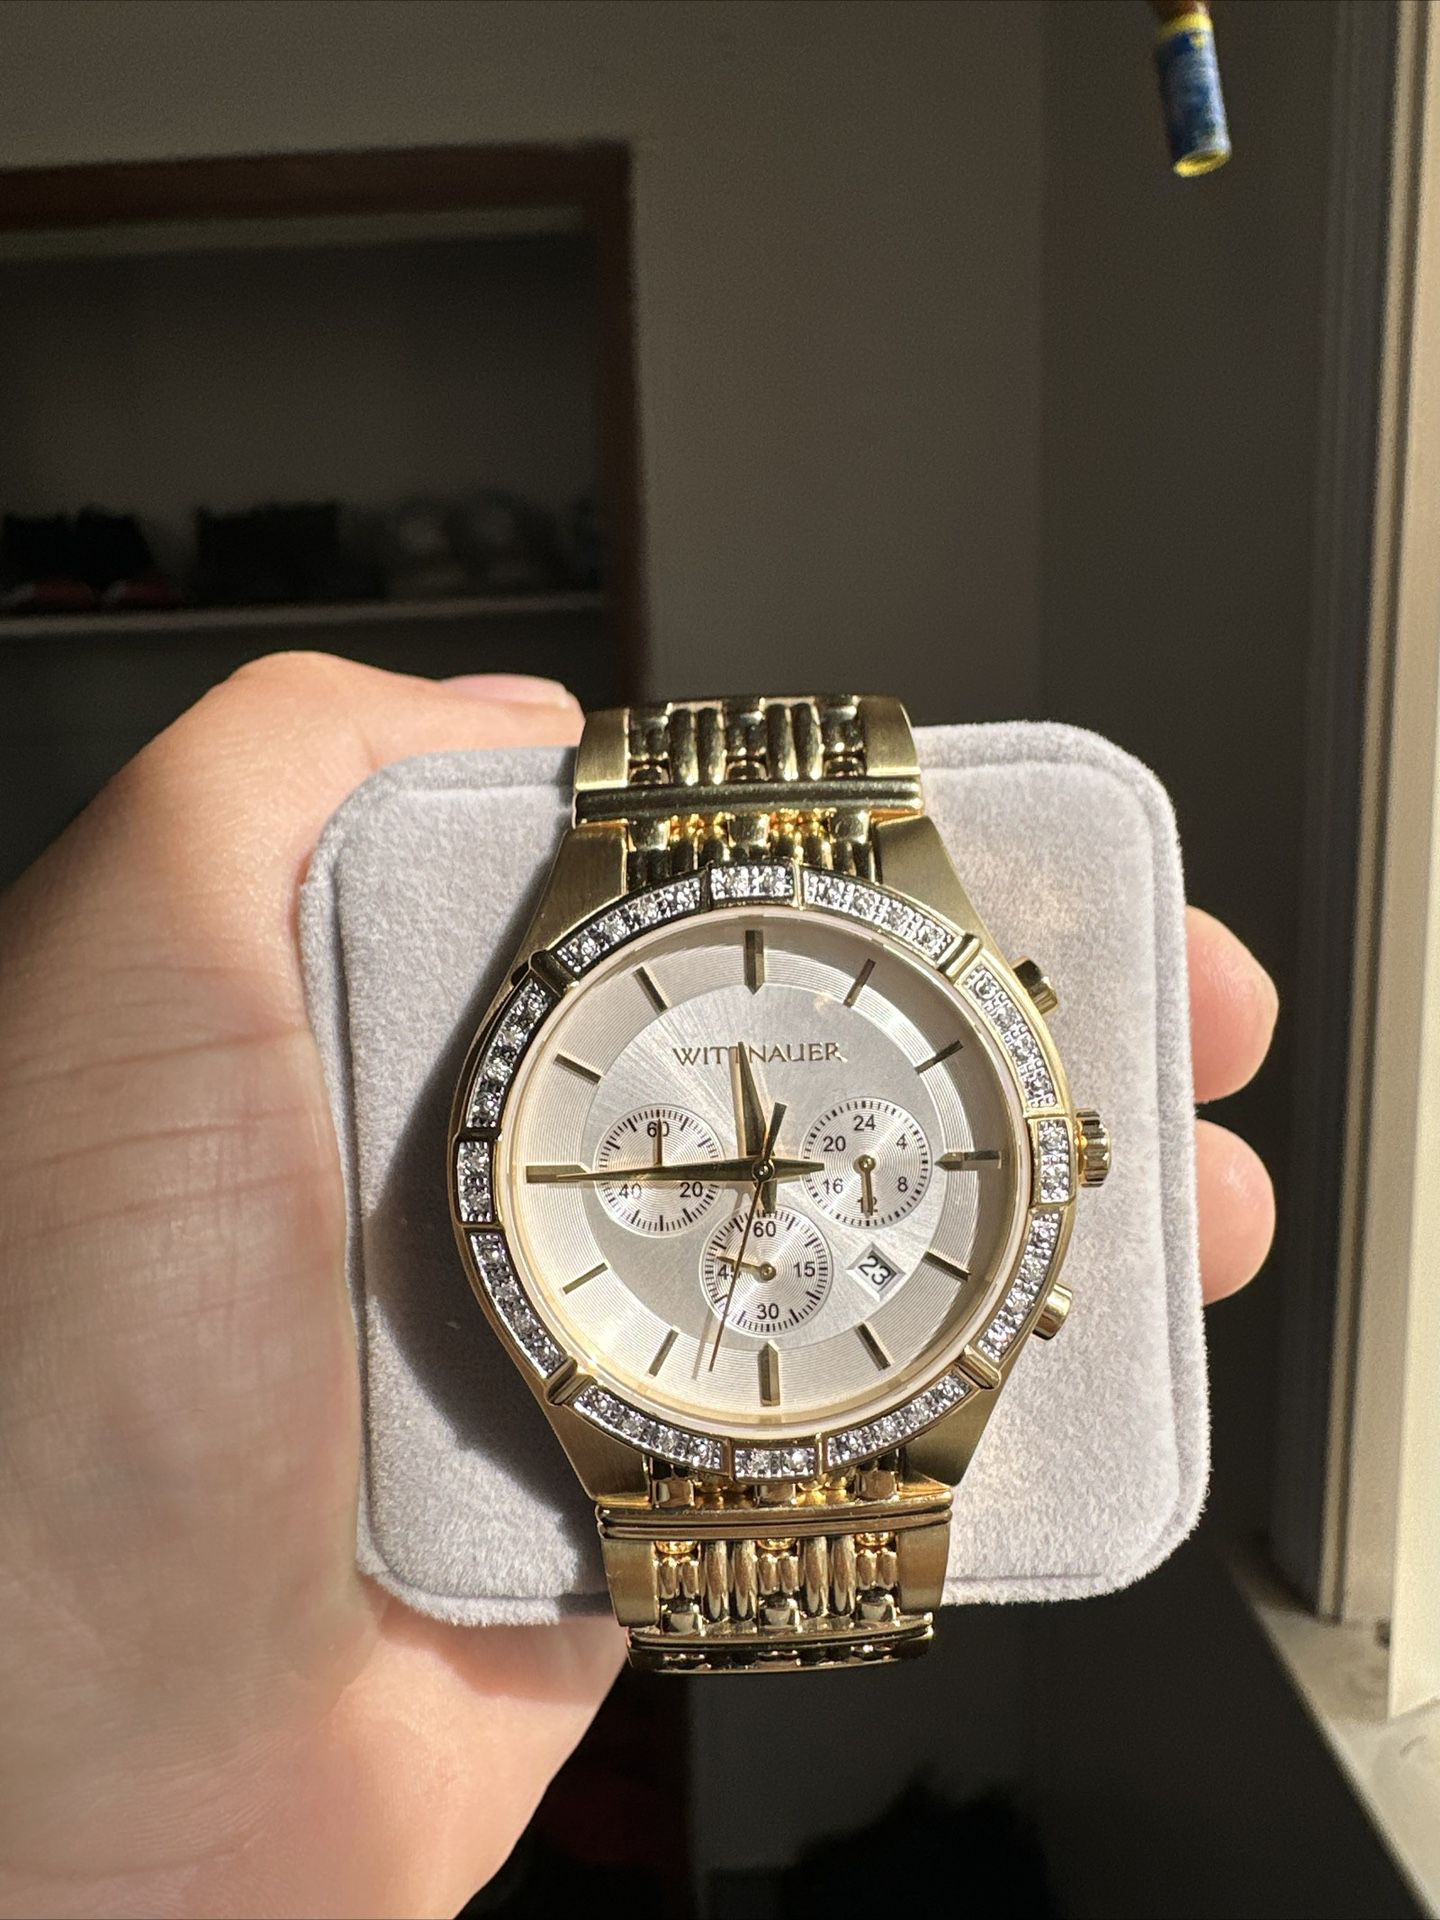 Wattanuer Wn-3079 Men’s Luxury Watch